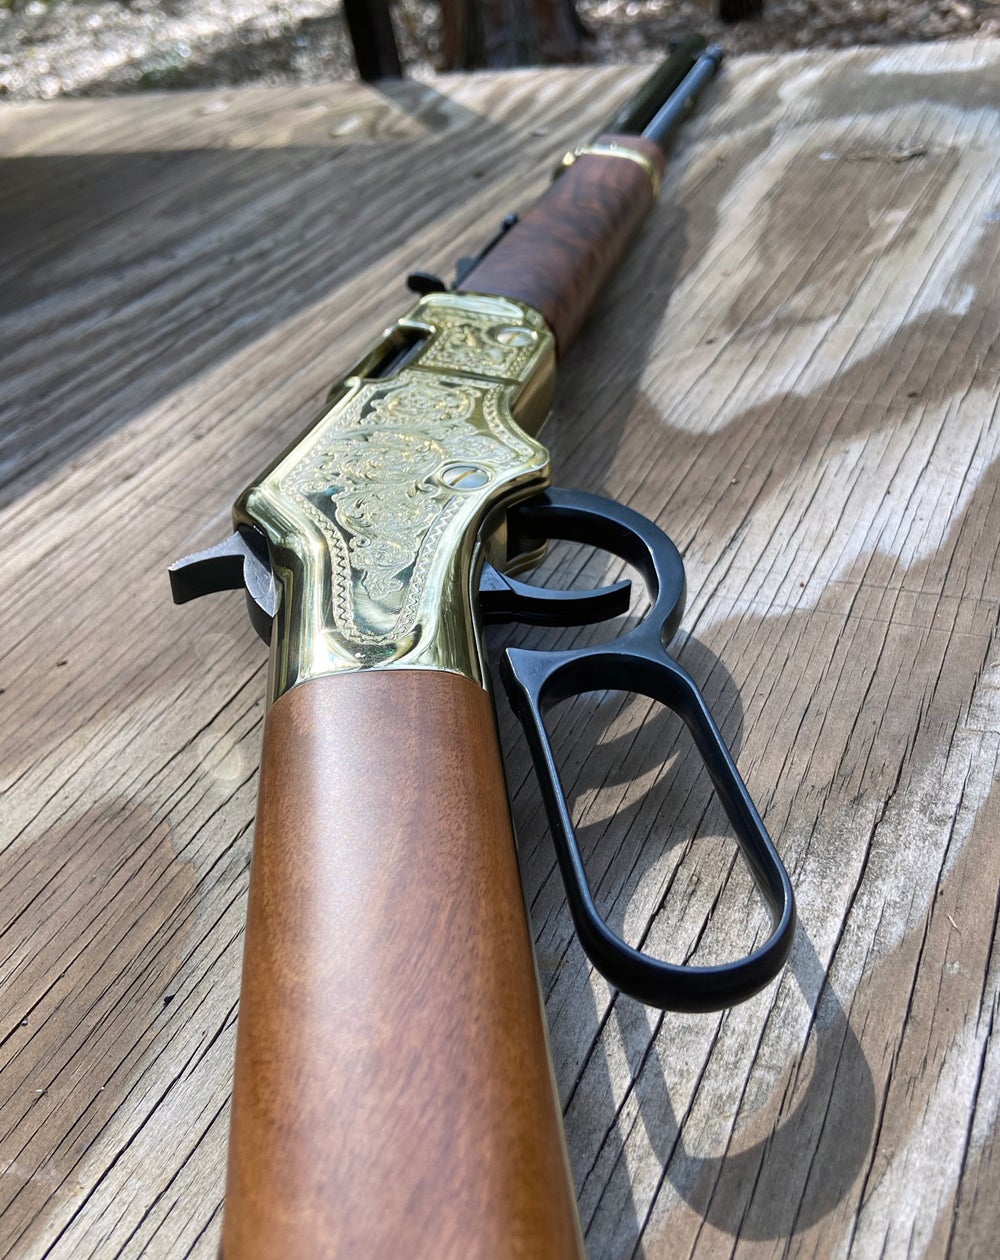 Henry Cody Firearms Museum Golden Boy 22 rimfire rifle. (Photo © Russ Chastain)